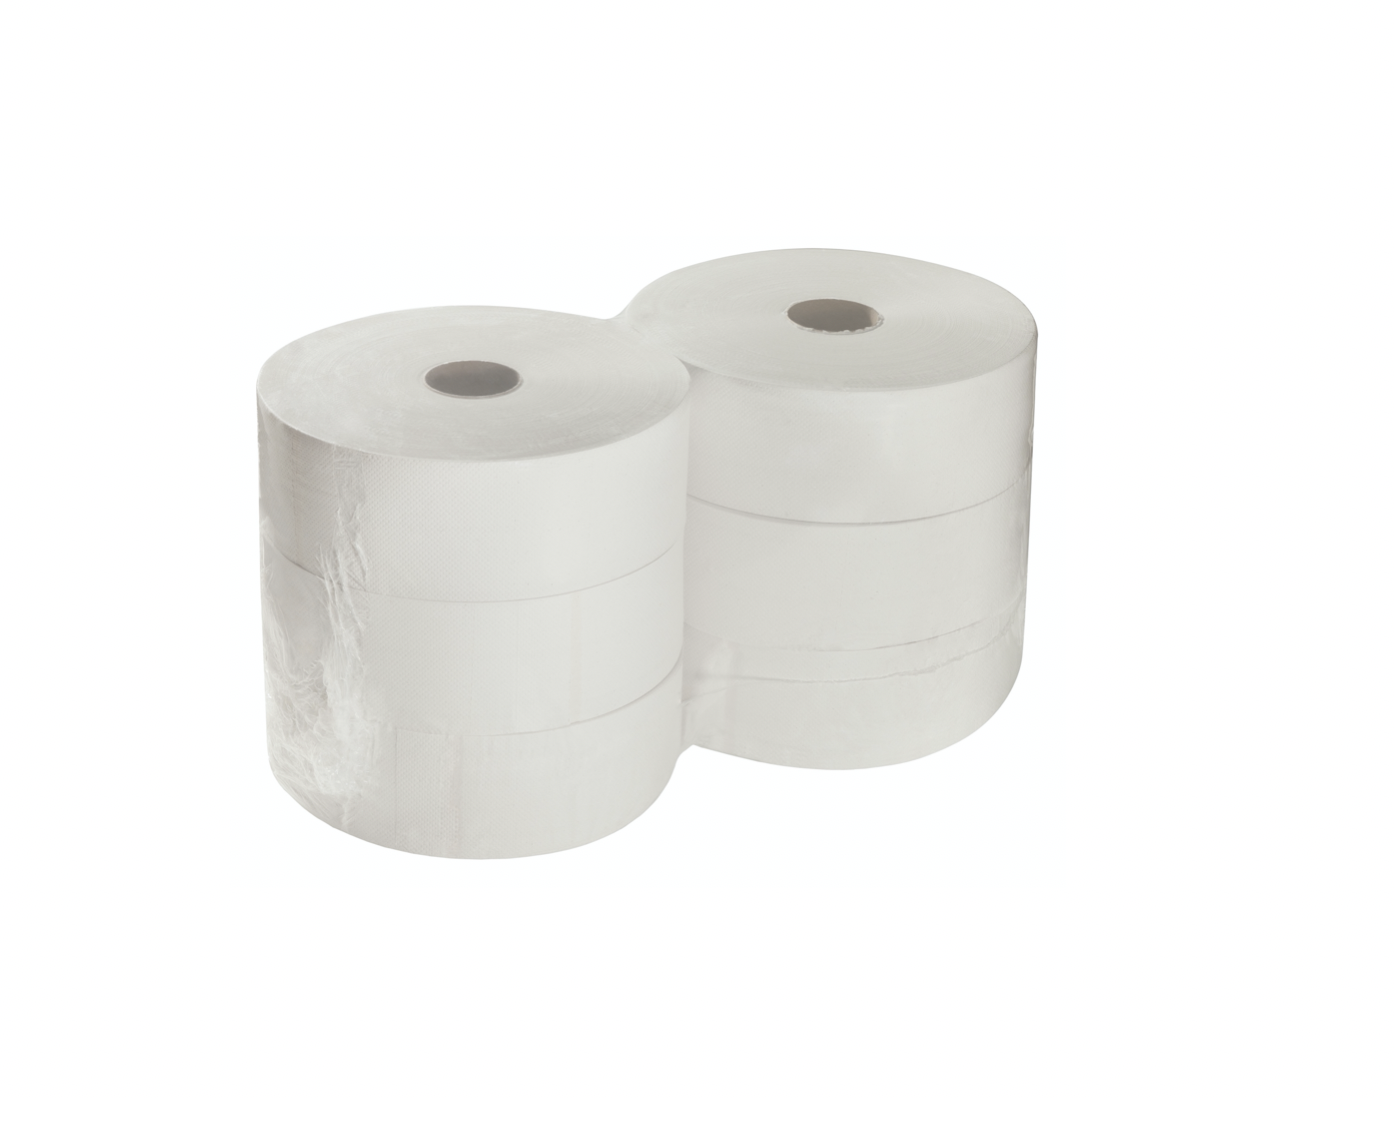 Jumbo-Toilettenpapier, 2-lagig, 380,0m, Recycling
2 x 17,0 g/m², hochweiß 75°, Blatt 9,0 x 22,0 cm, Ø Hülse 6cm, Ø Rolle 2